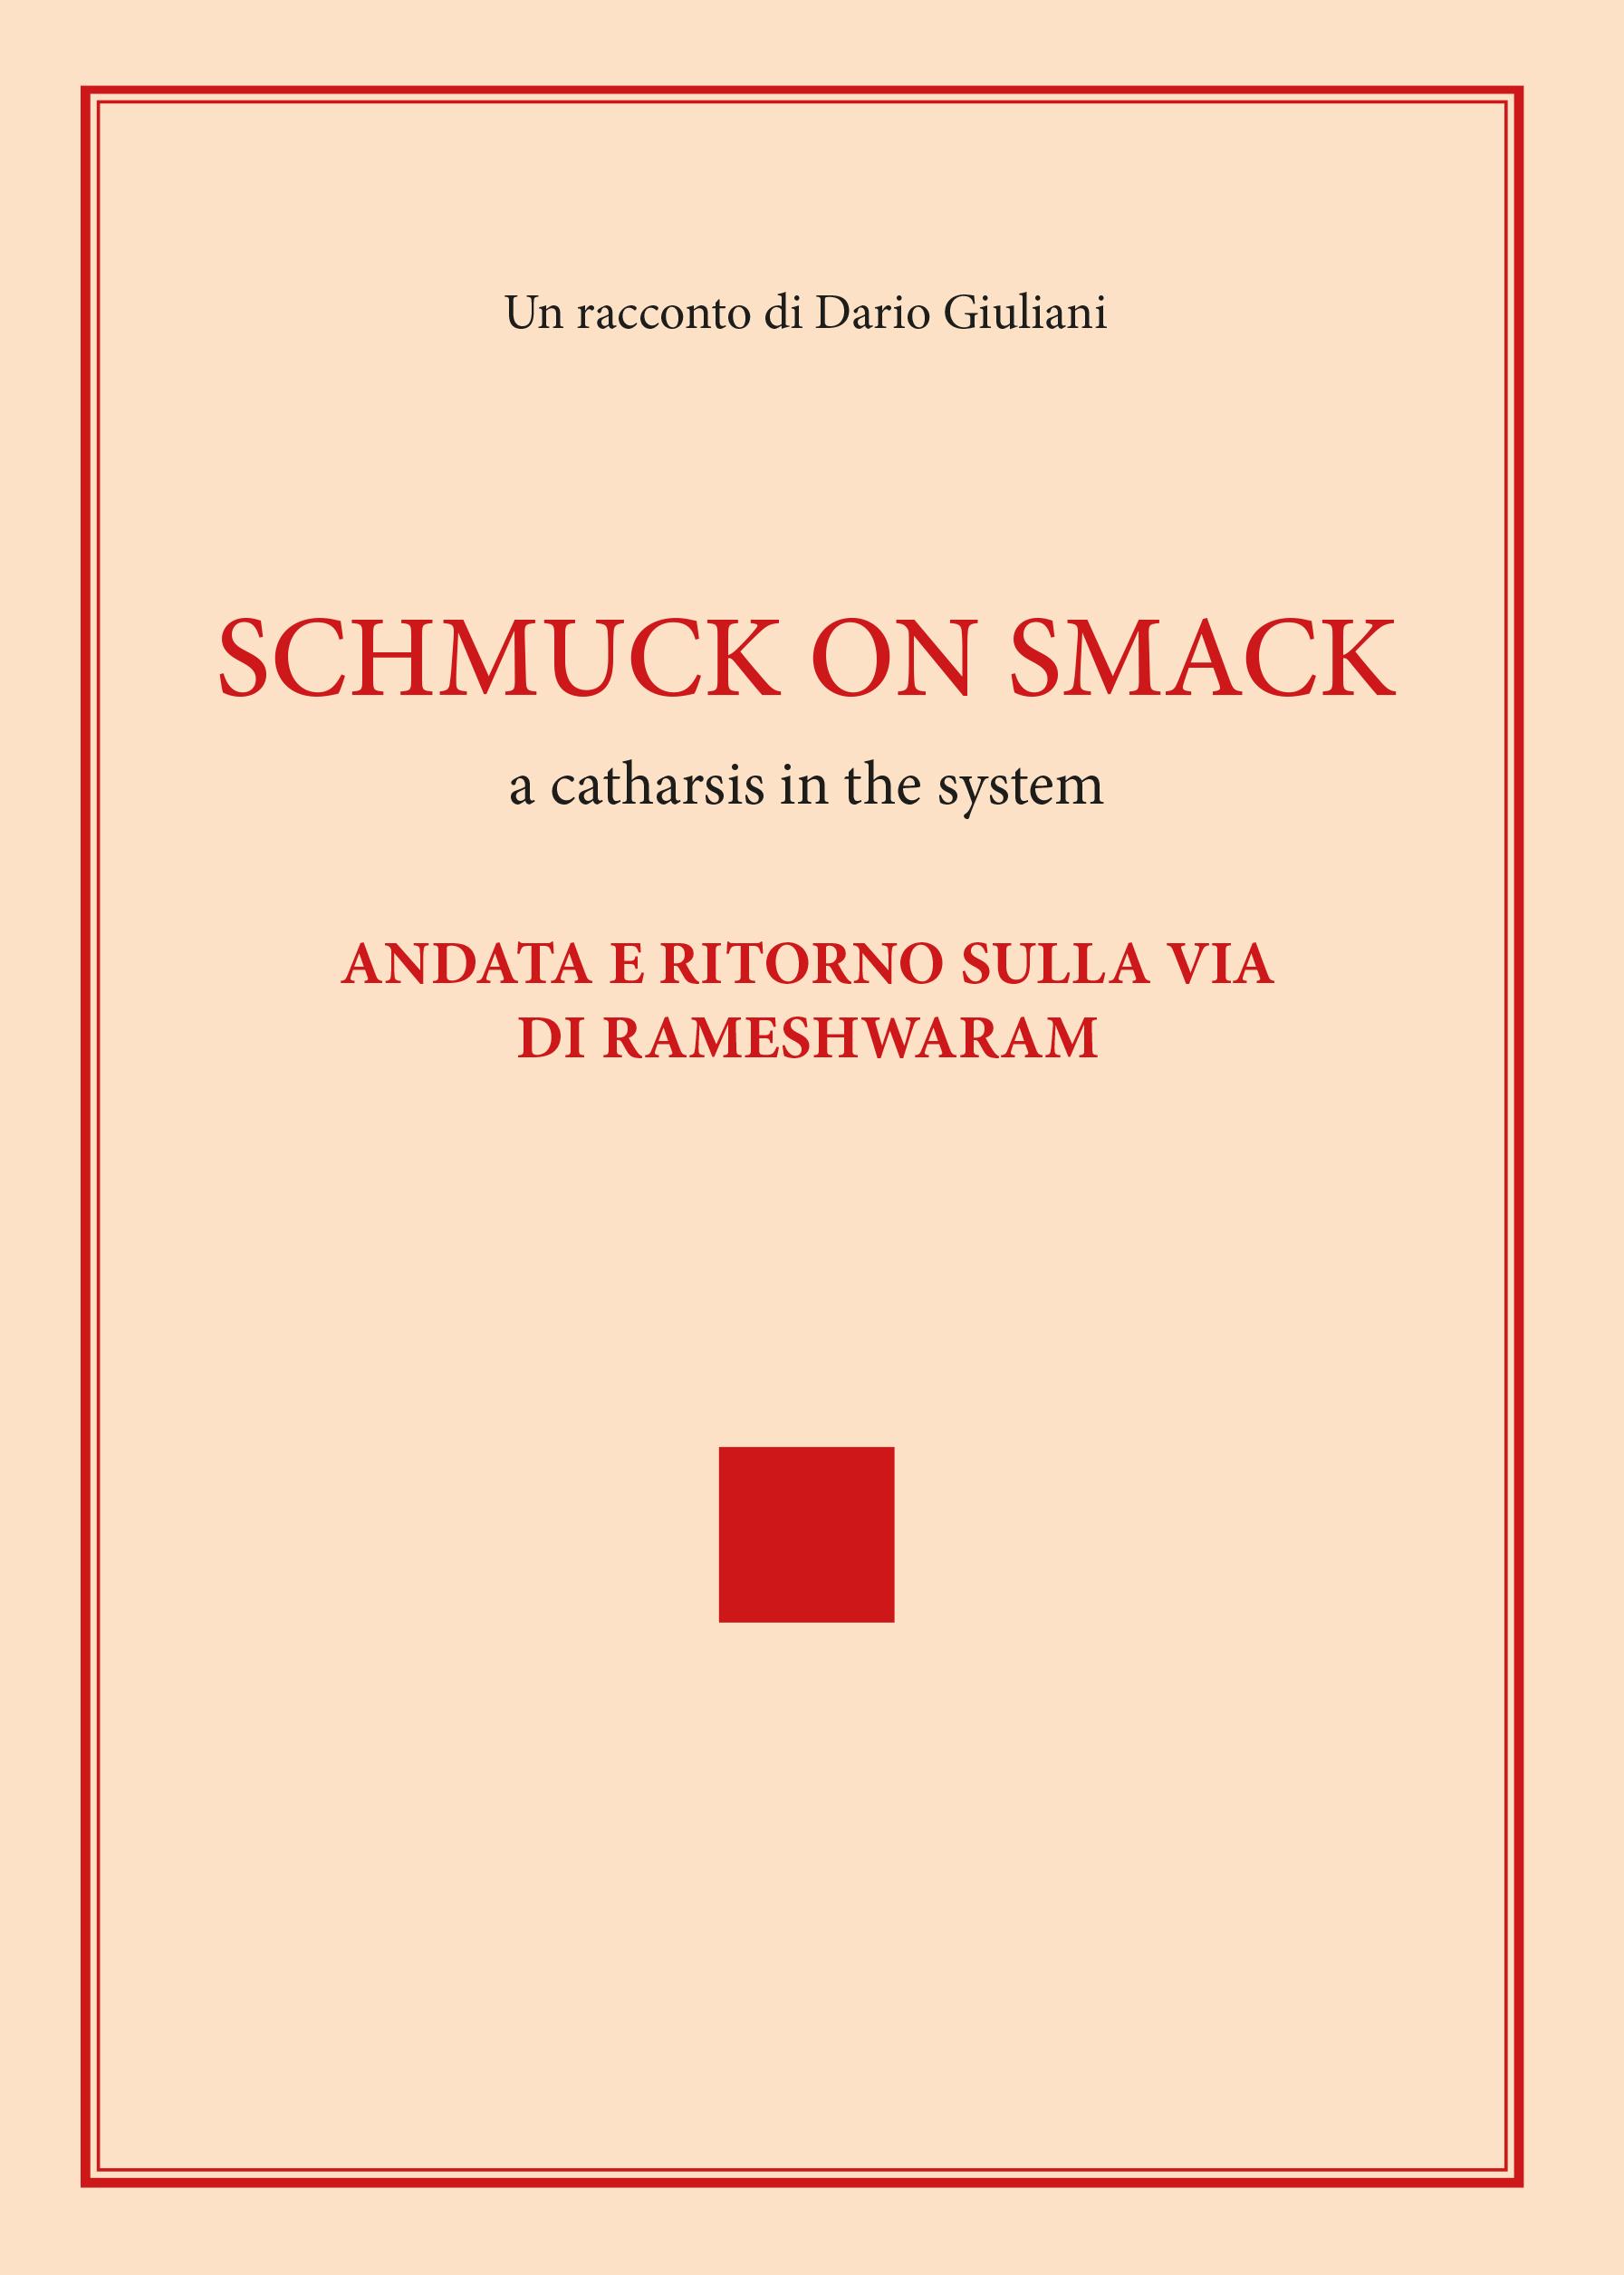 Schmuck on smack